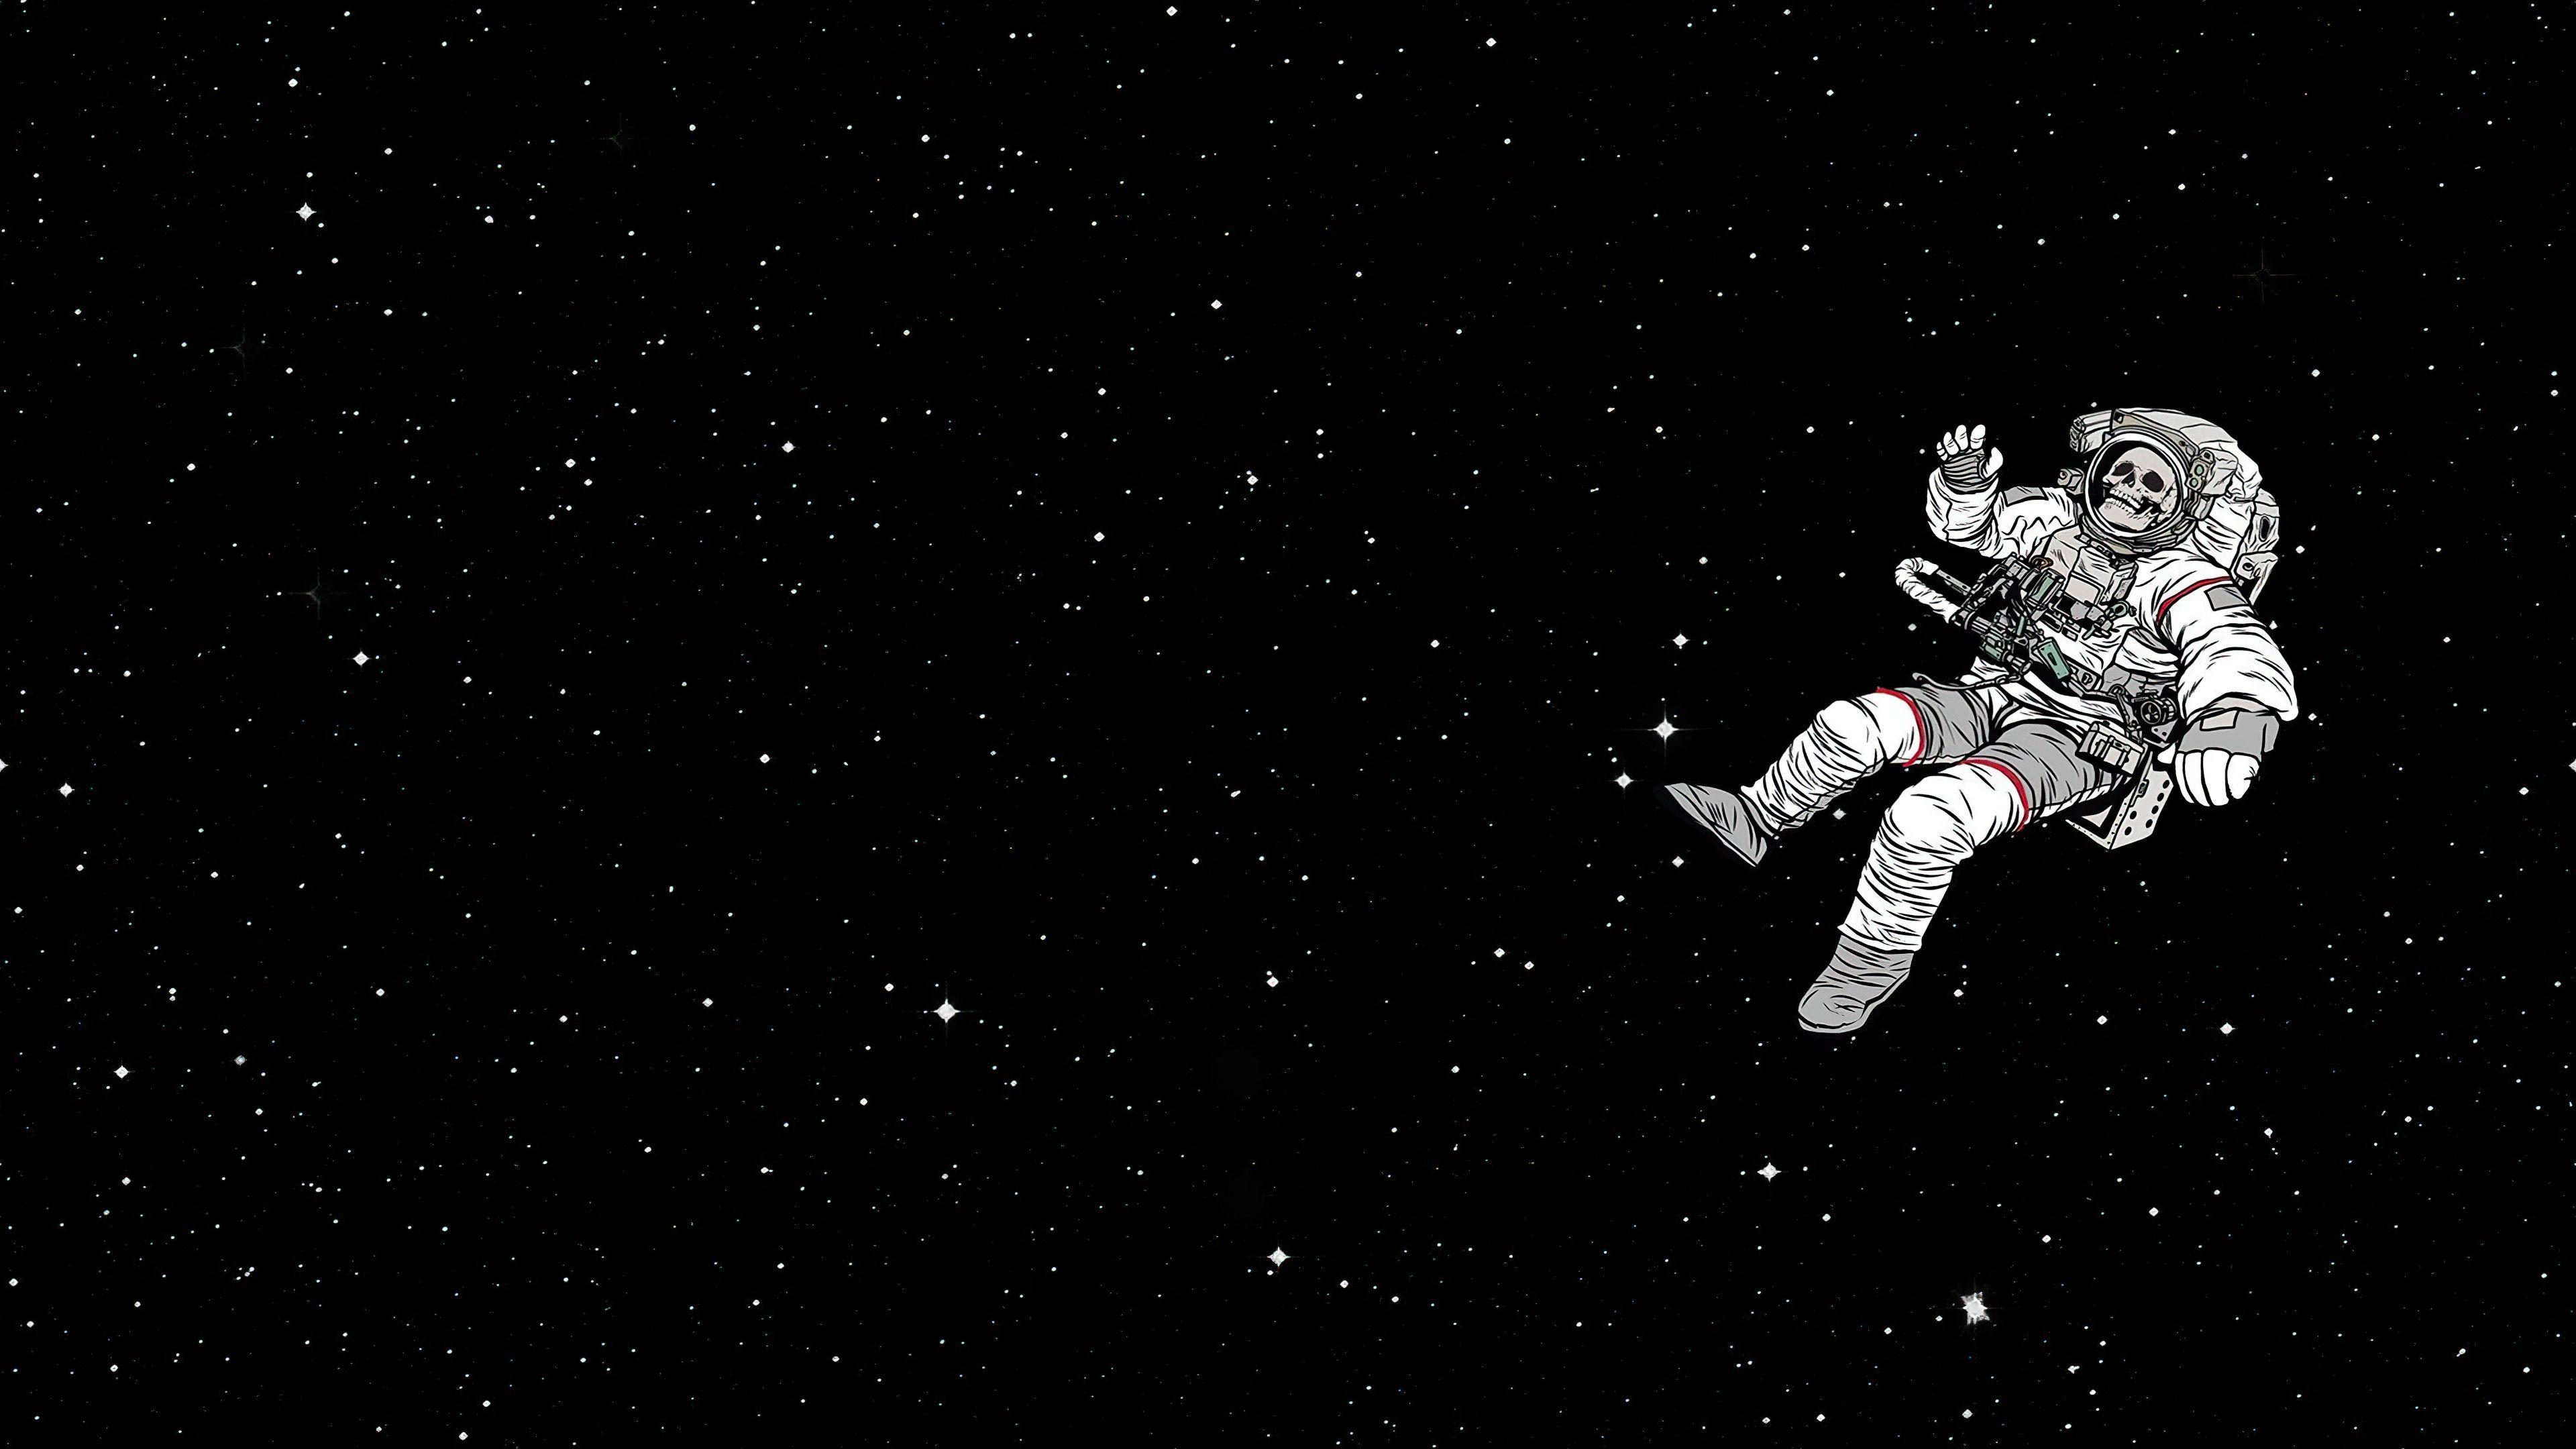 92 Wallpaper Aesthetic Black Astronaut free Download - MyWeb